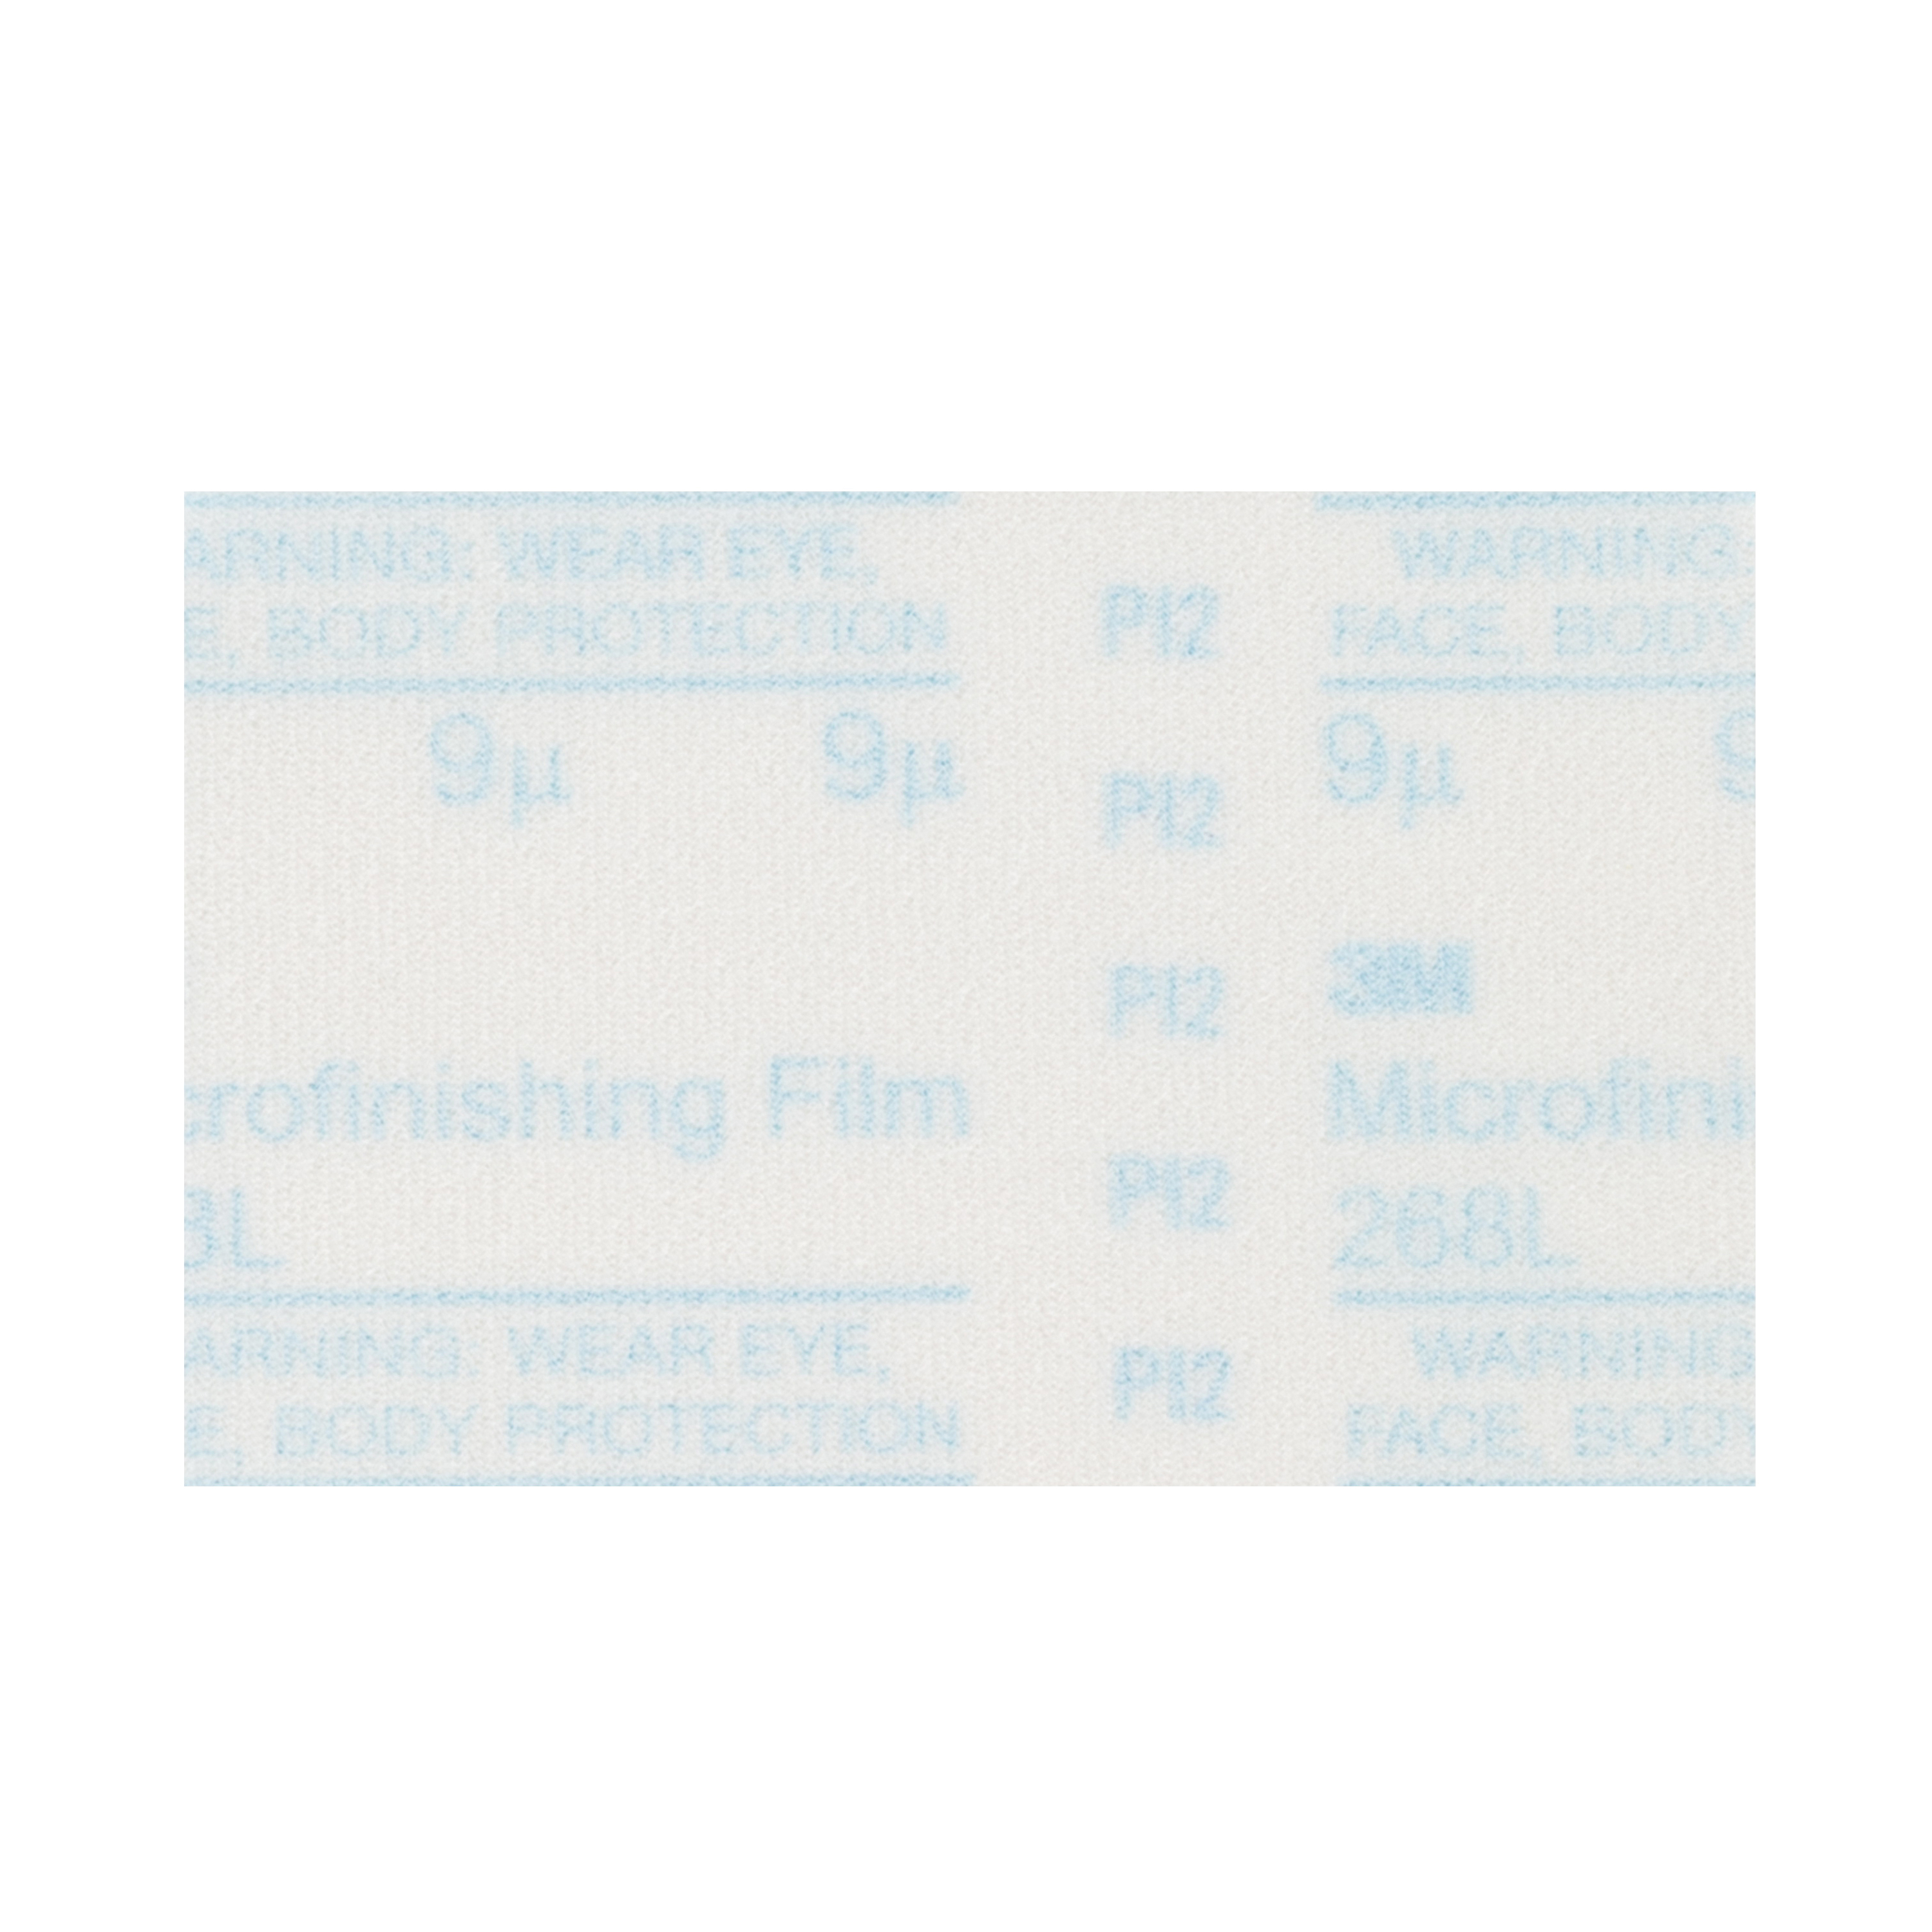 3M™ 051111-49994 268L Type D Microfinishing PSA Carbide Burr, 10 in Dia Disc, 15 micron Grit, Super Fine Grade, Aluminum Oxide Abrasive, Polyester Film Backing